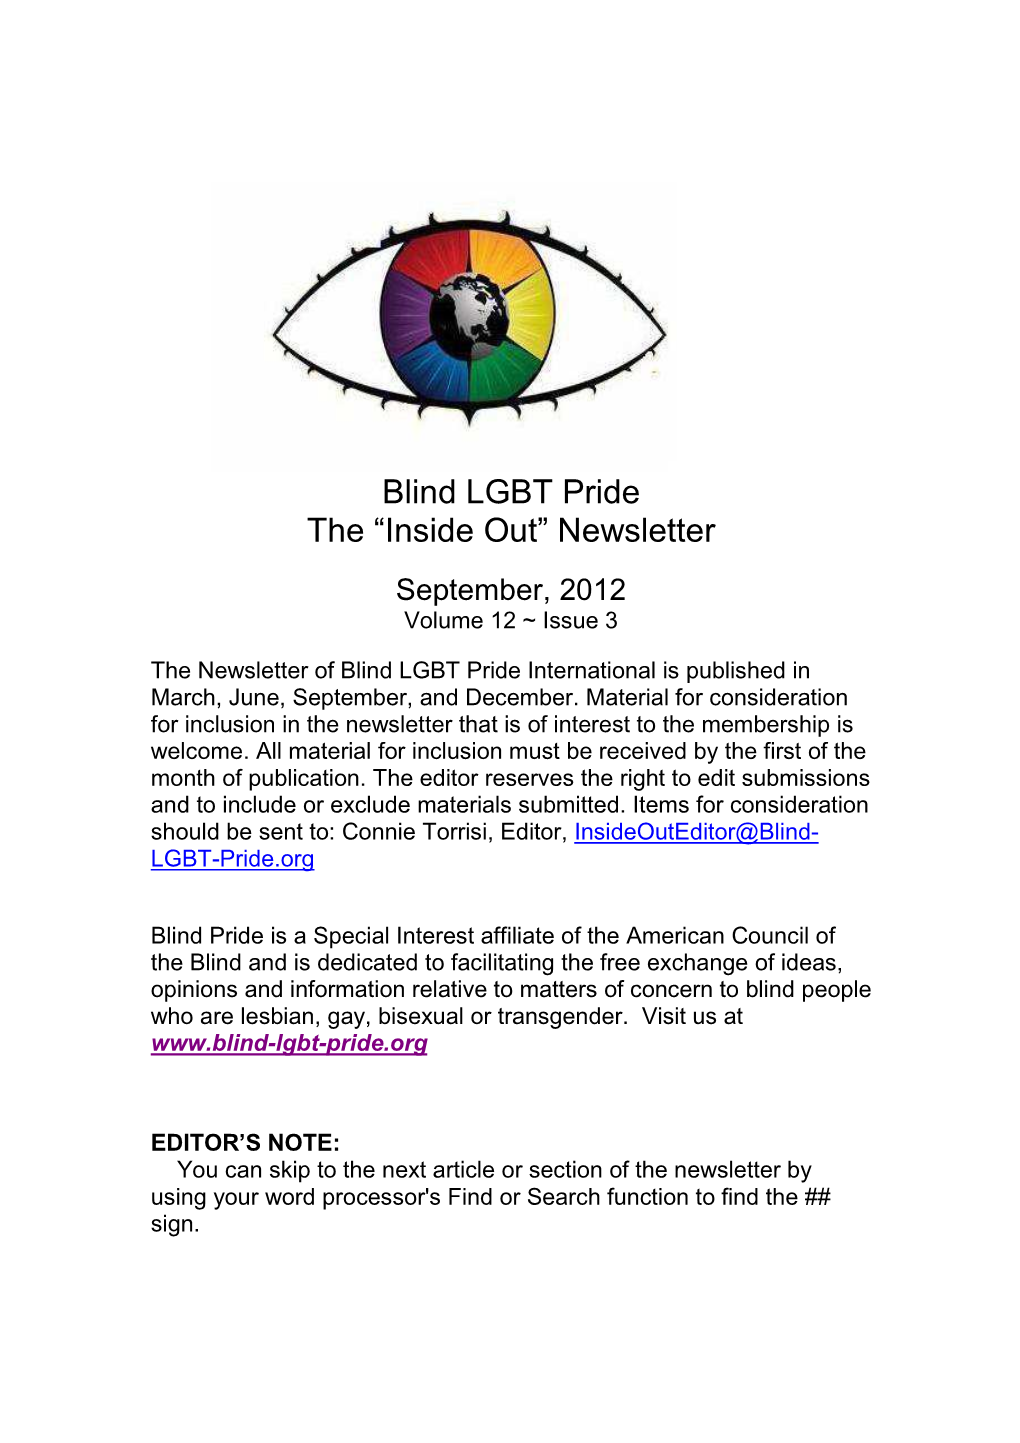 Blind LGBT Pride the “Inside Out” Newsletter